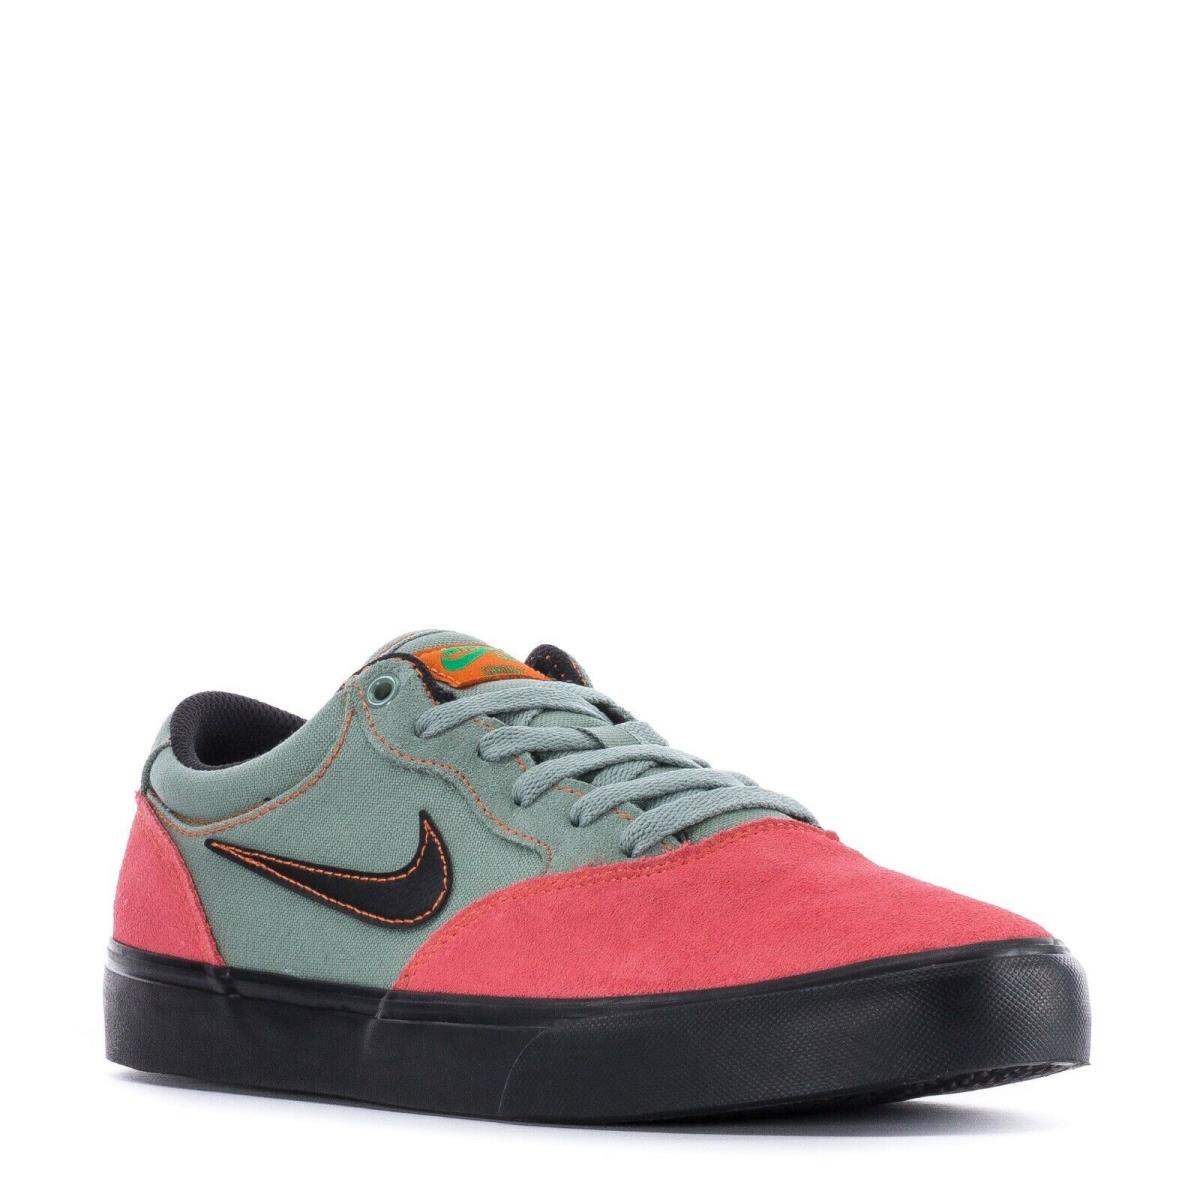 Nike shoes Chron - Multicolor 0